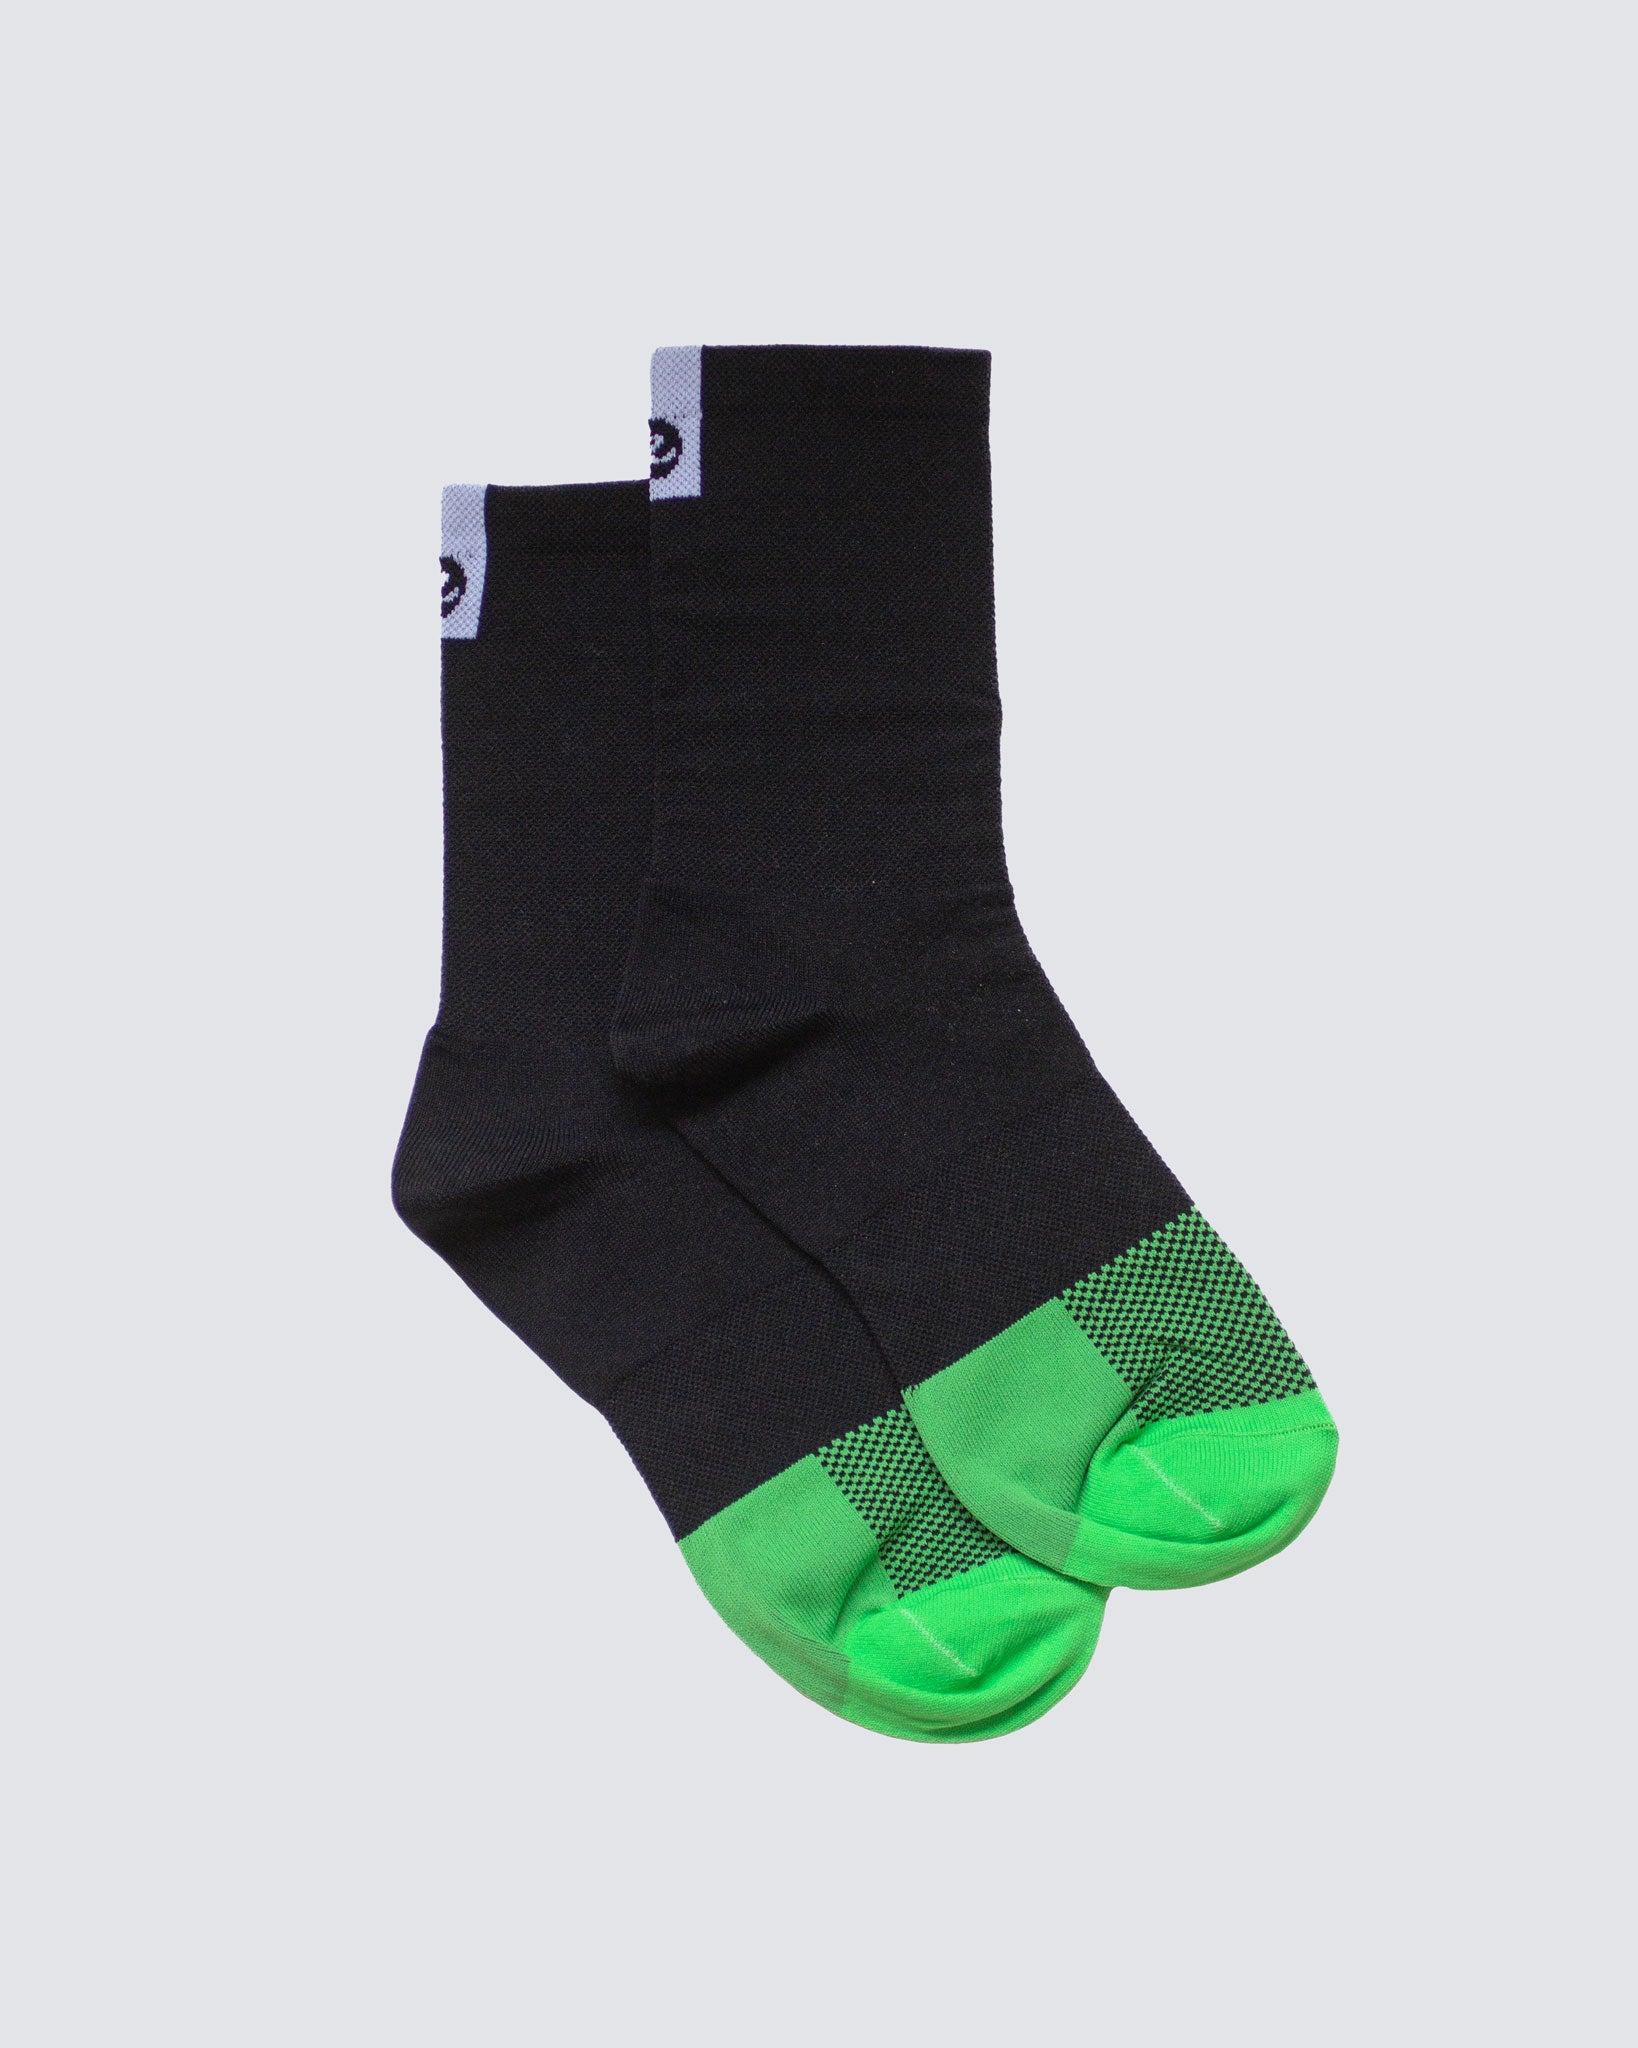 black socks with white background